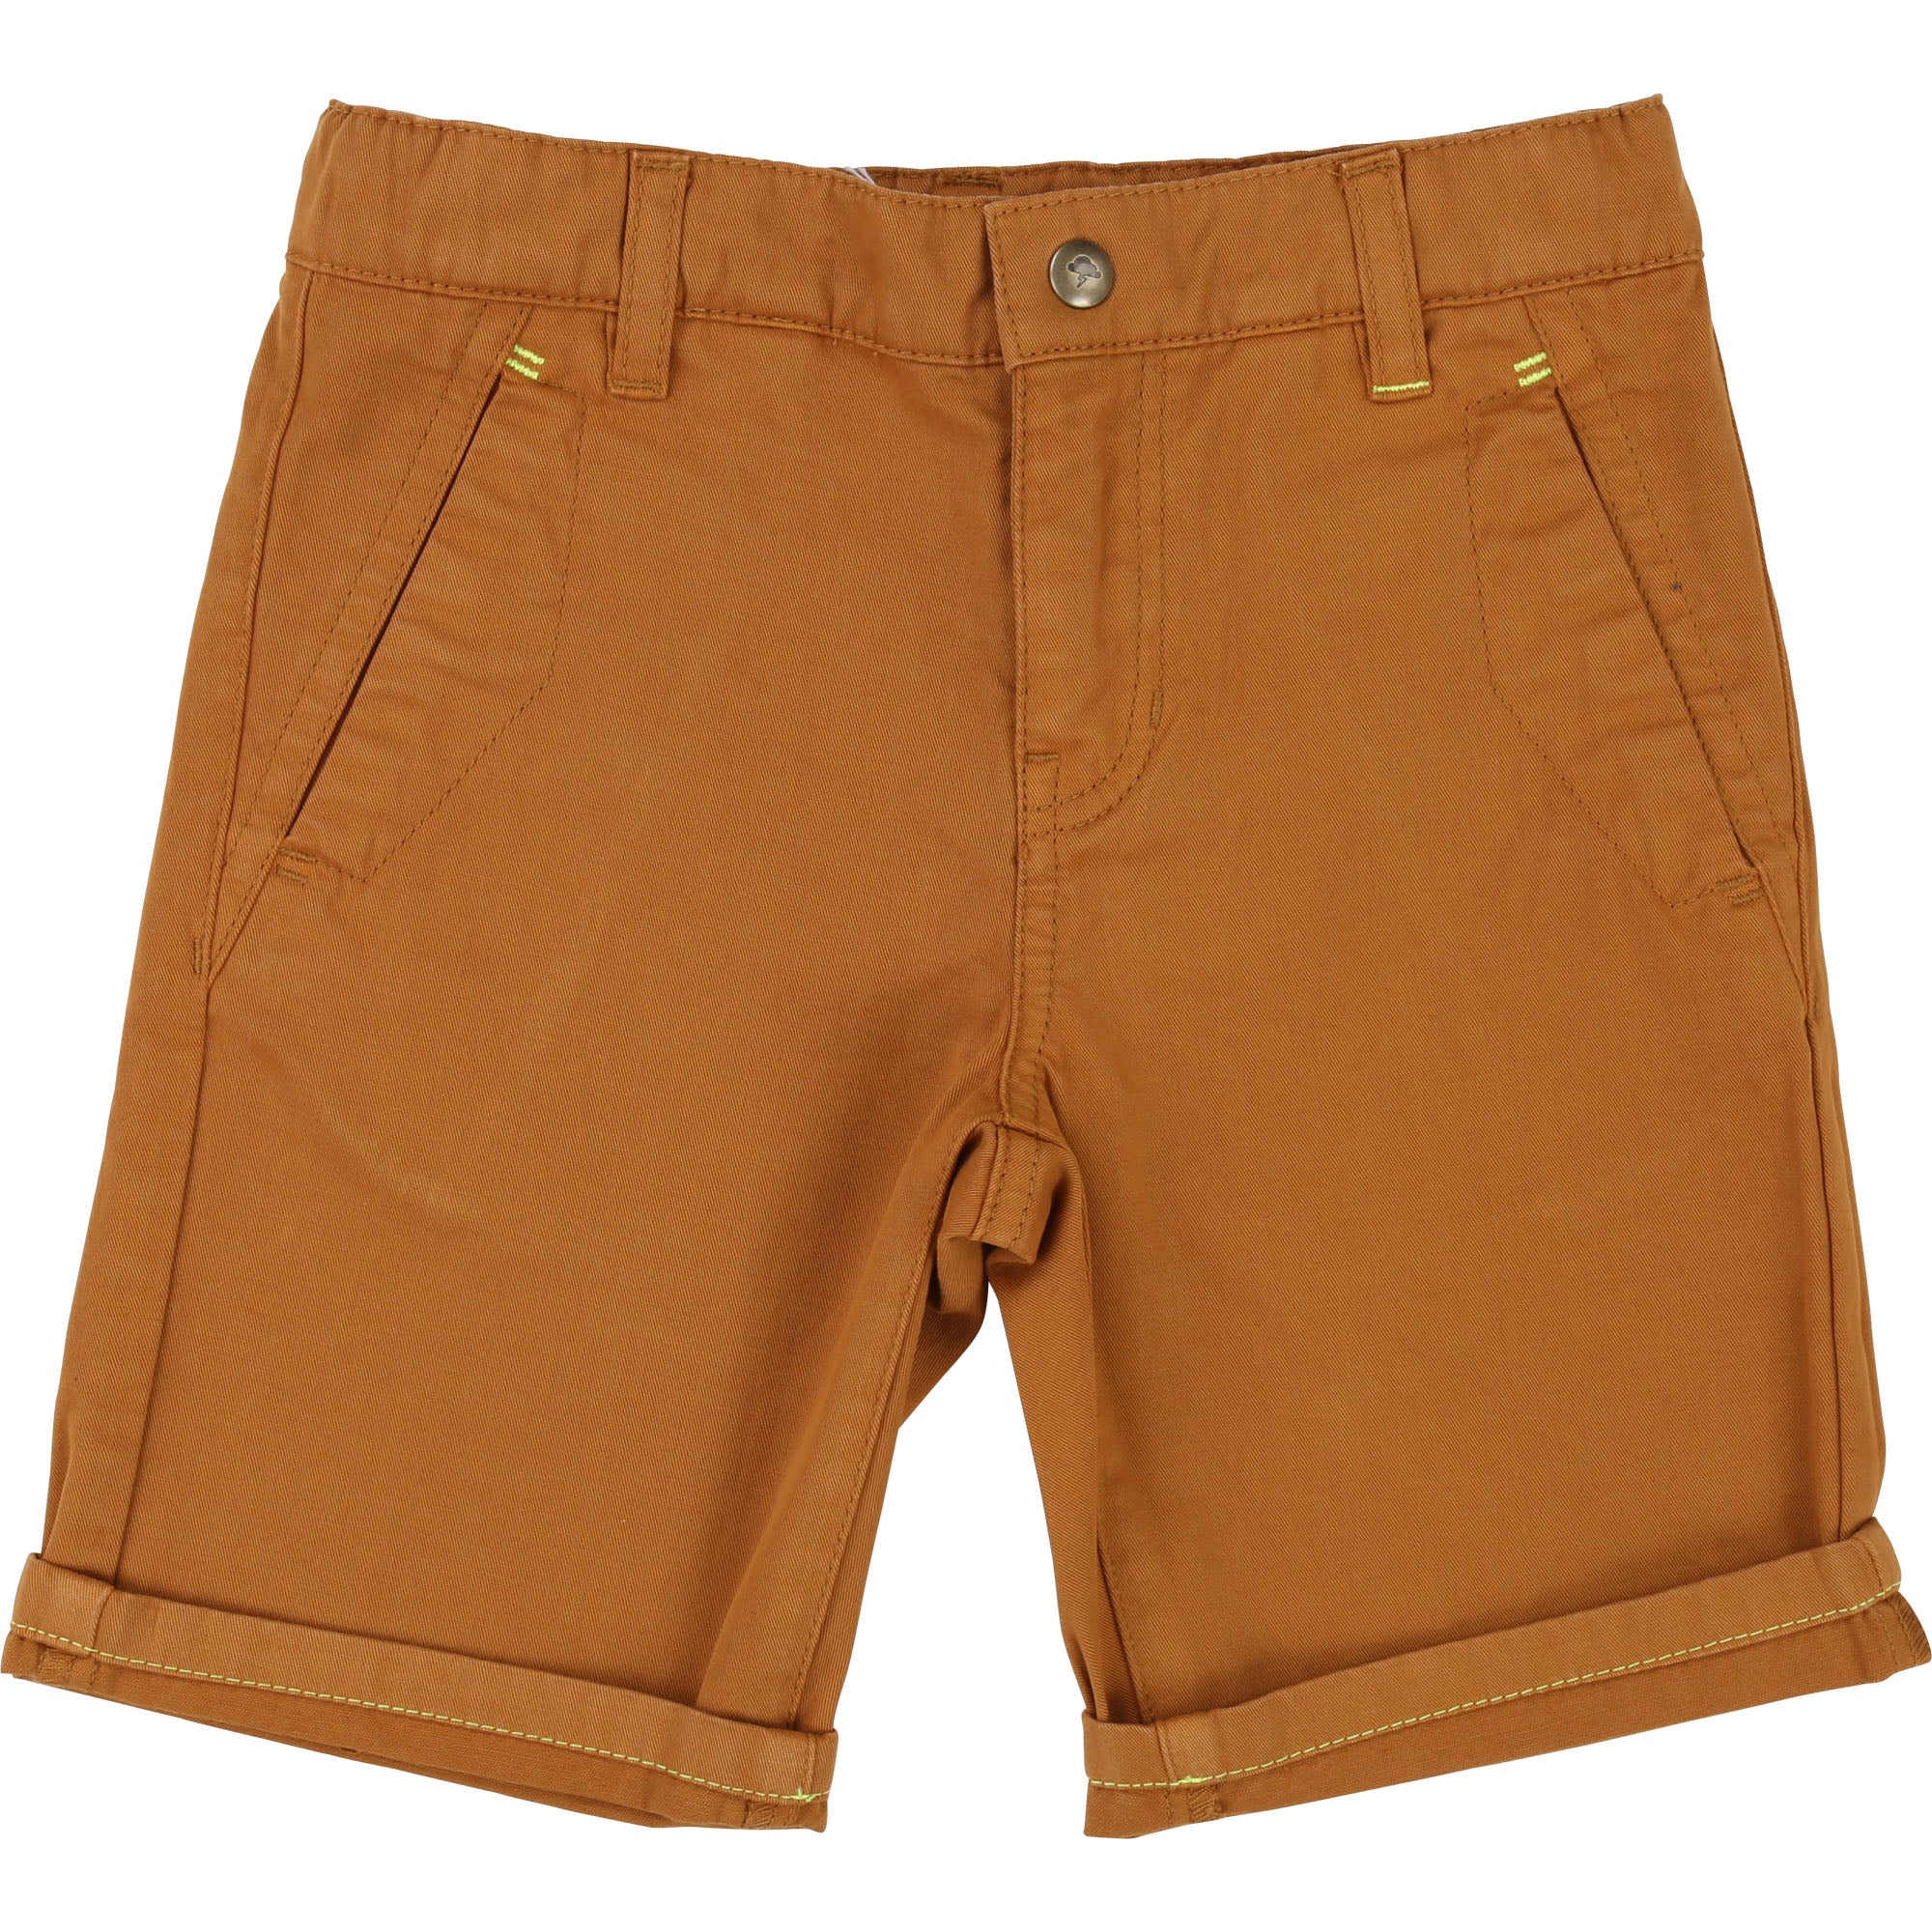 Boys Khaki Cotton Shorts